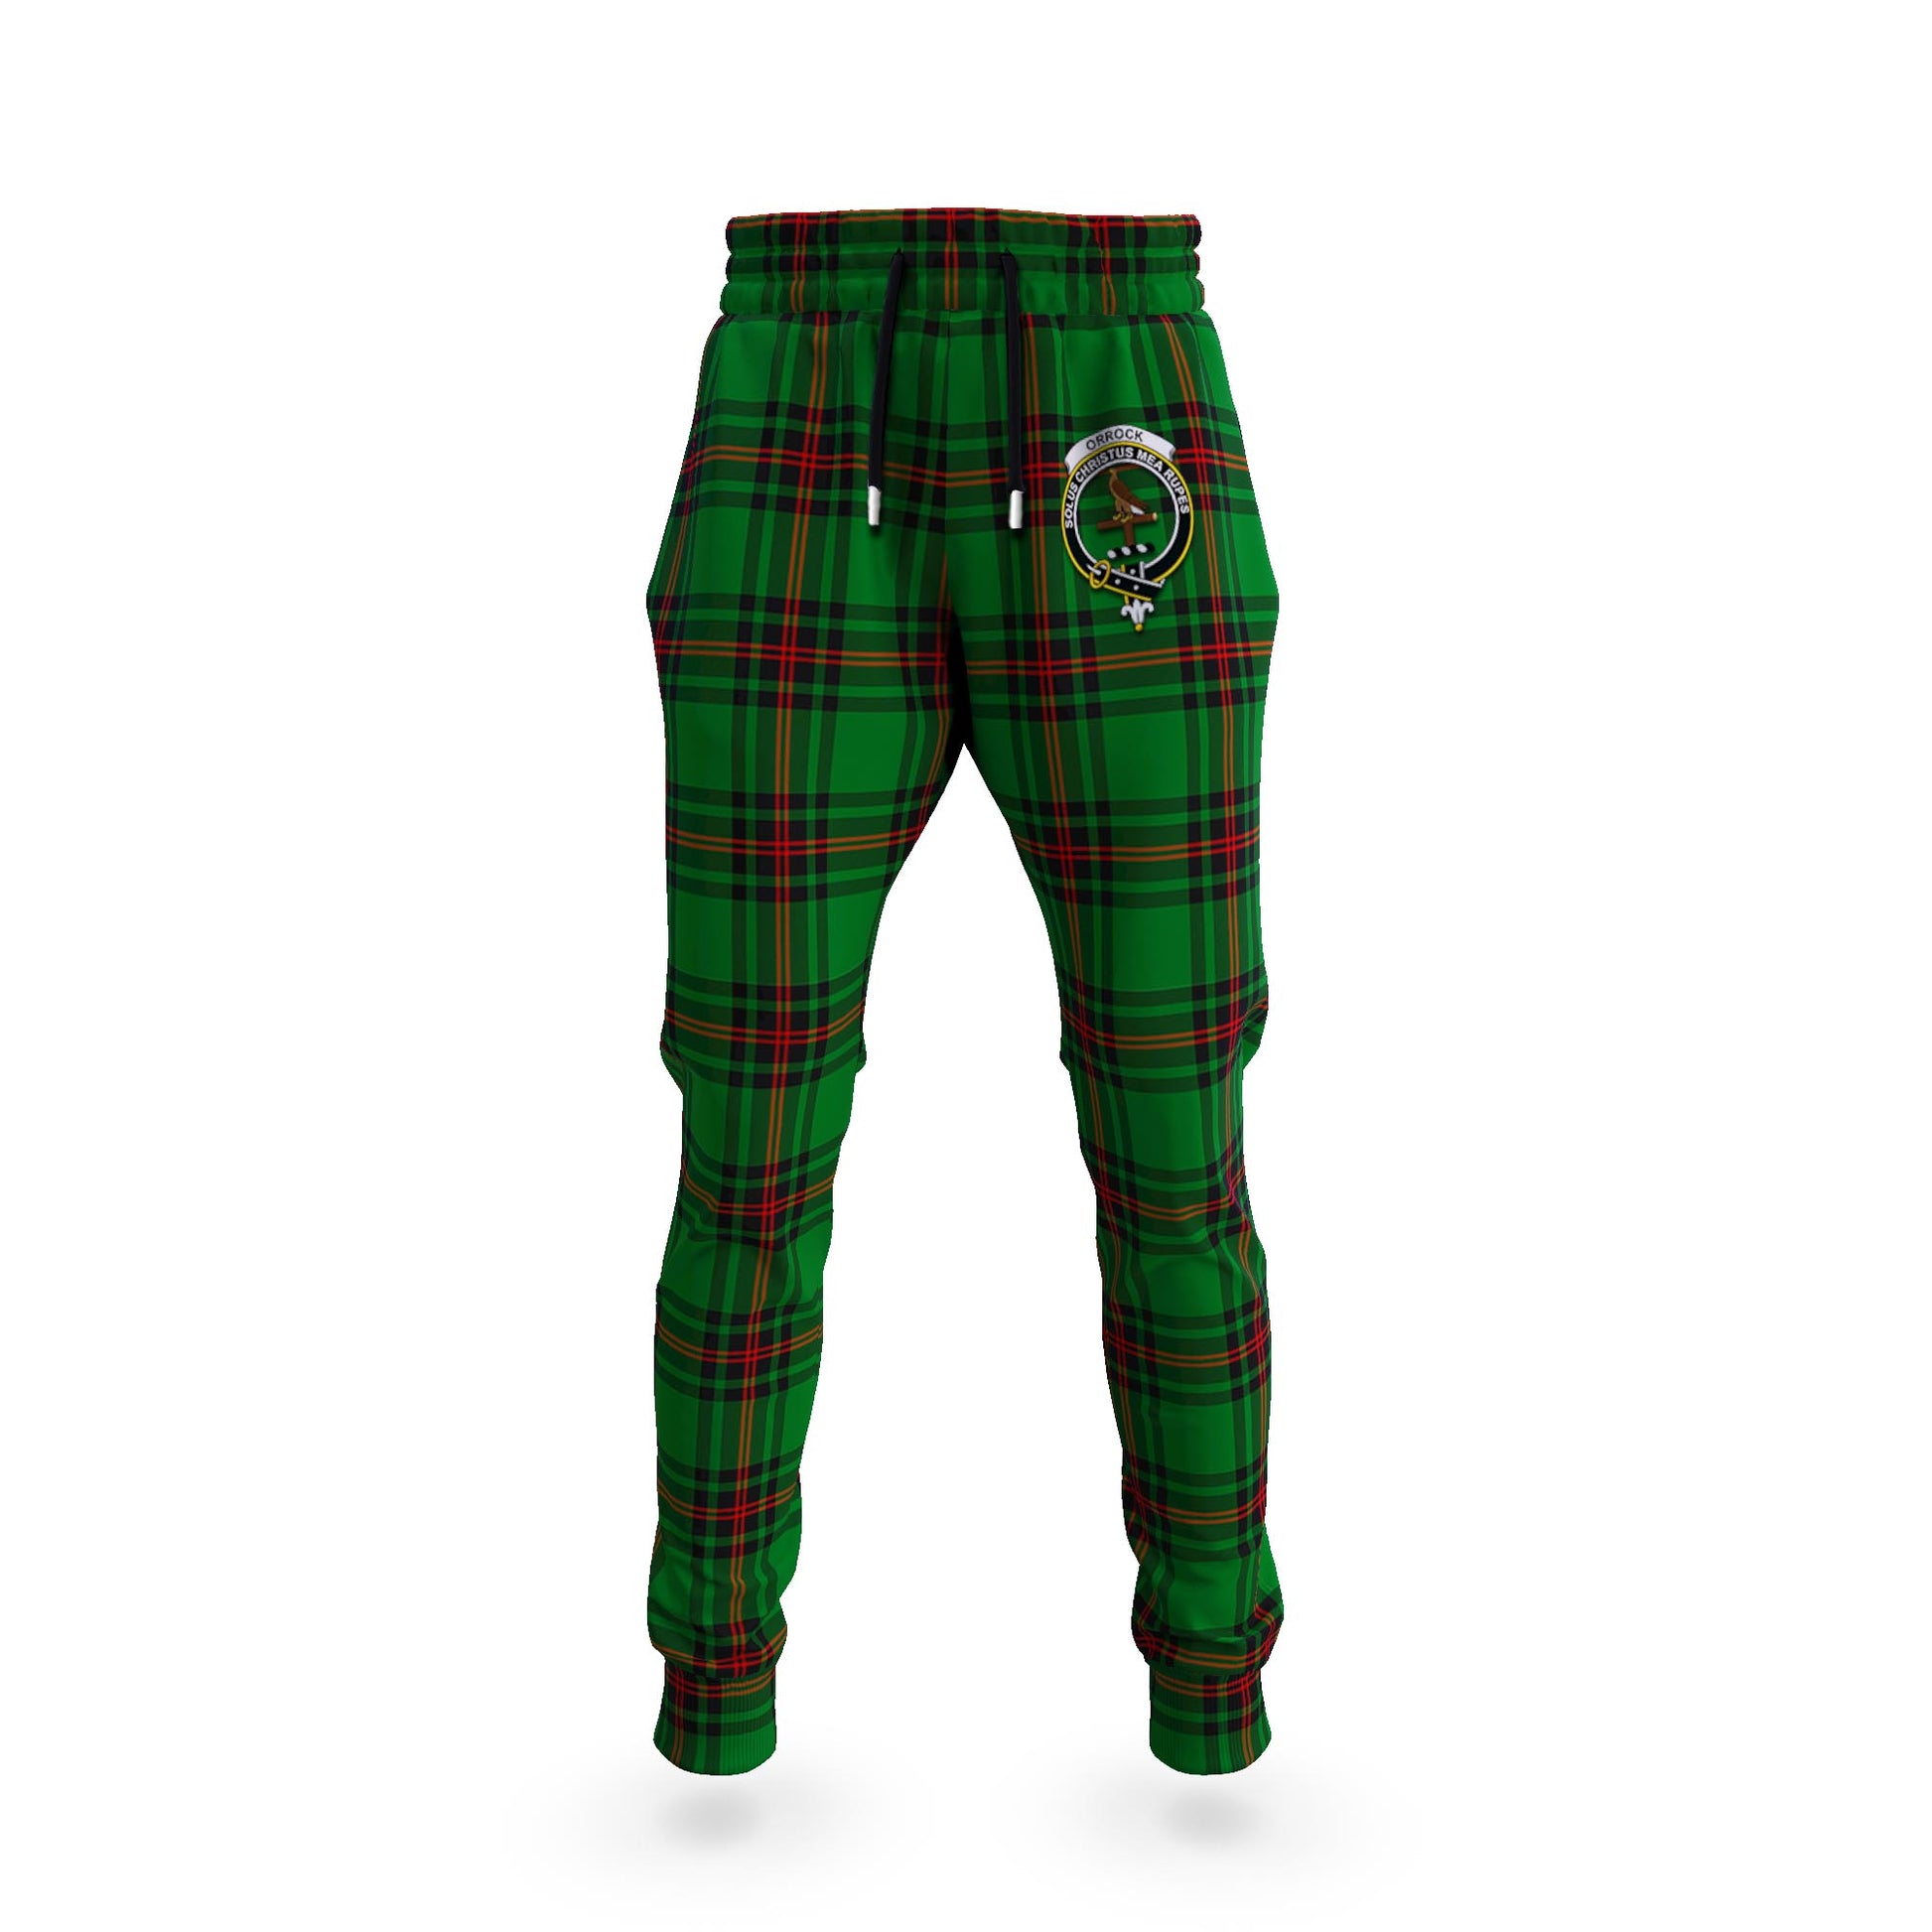 Orrock Tartan Joggers Pants with Family Crest - Tartanvibesclothing Shop